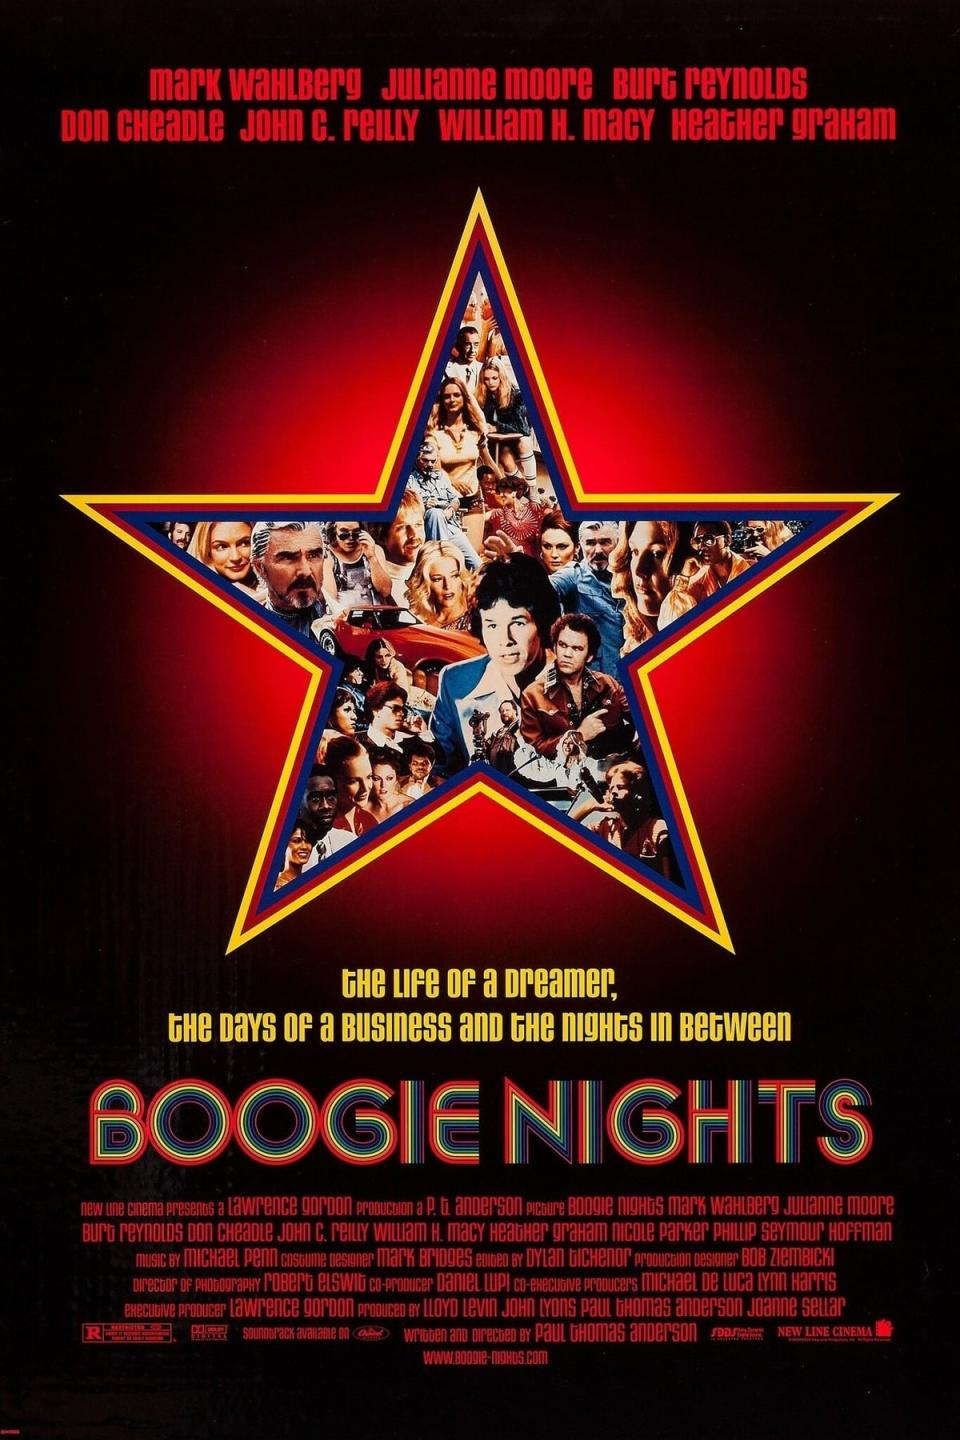 The original poster artwork for ‘Boogie Nights’ (New Line Cinema)